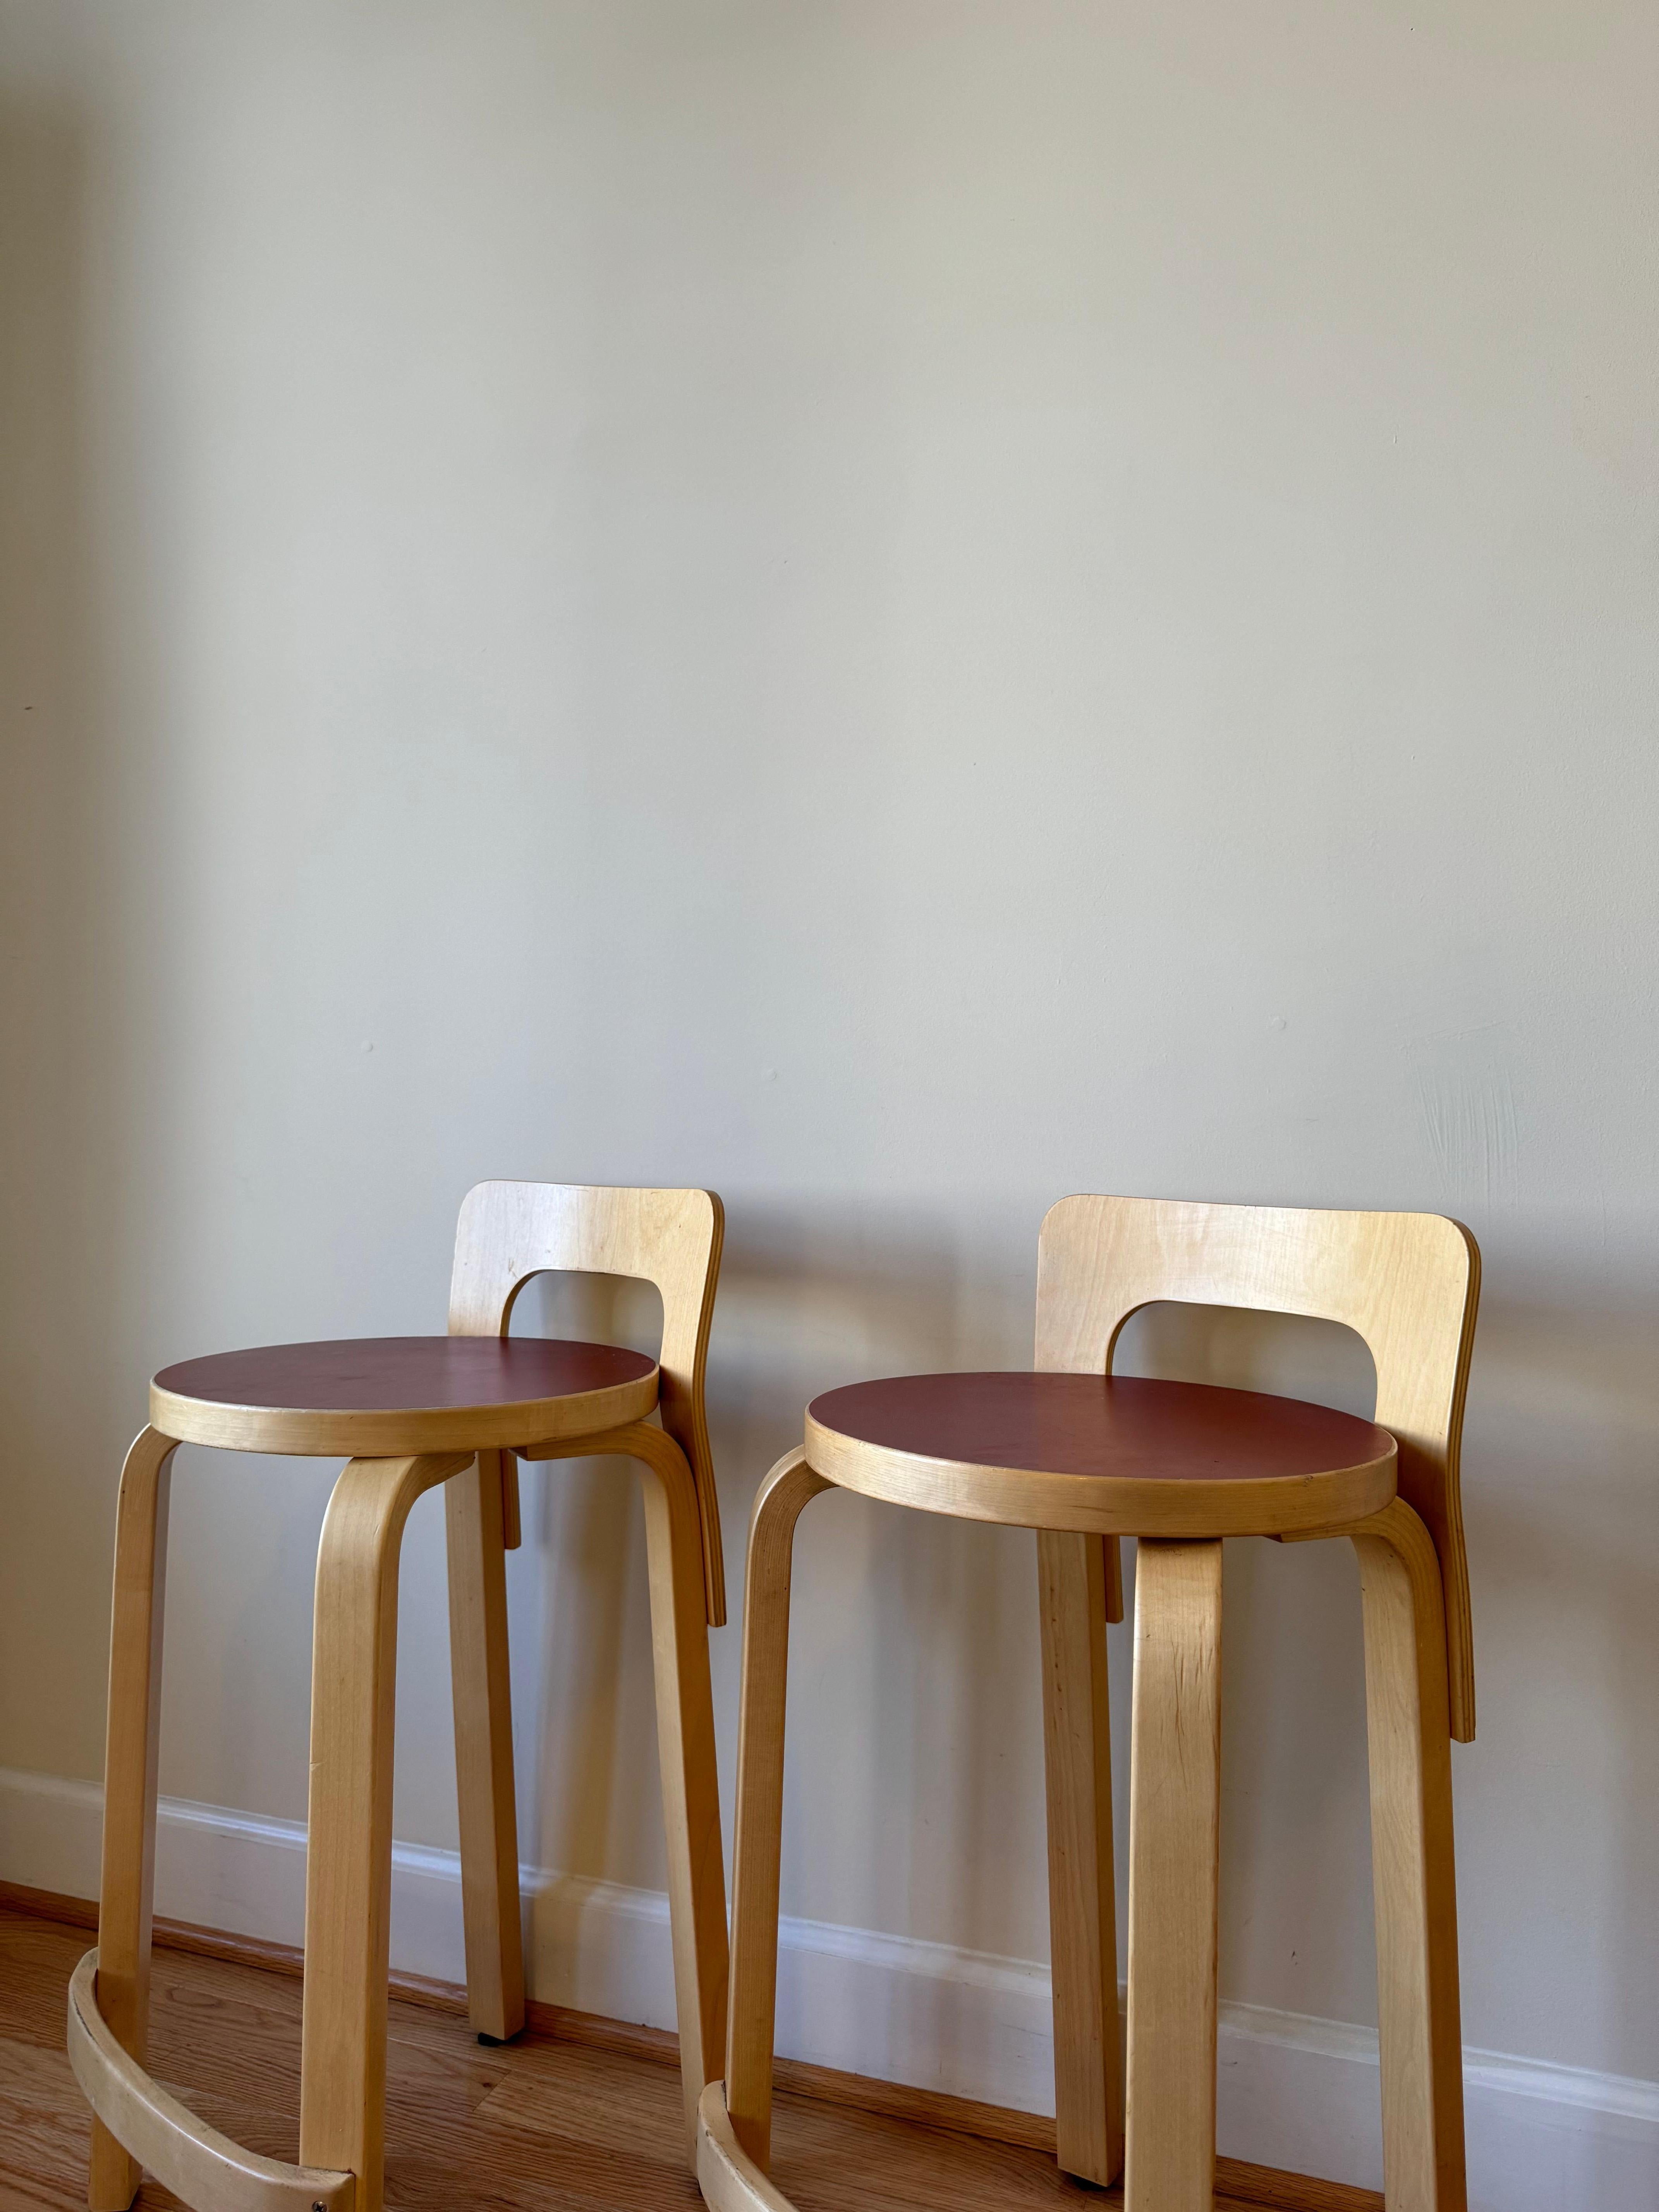 Mid-Century Modern High Chair K65 by Alvar Aalto for Artek (Red Linoleum seat)